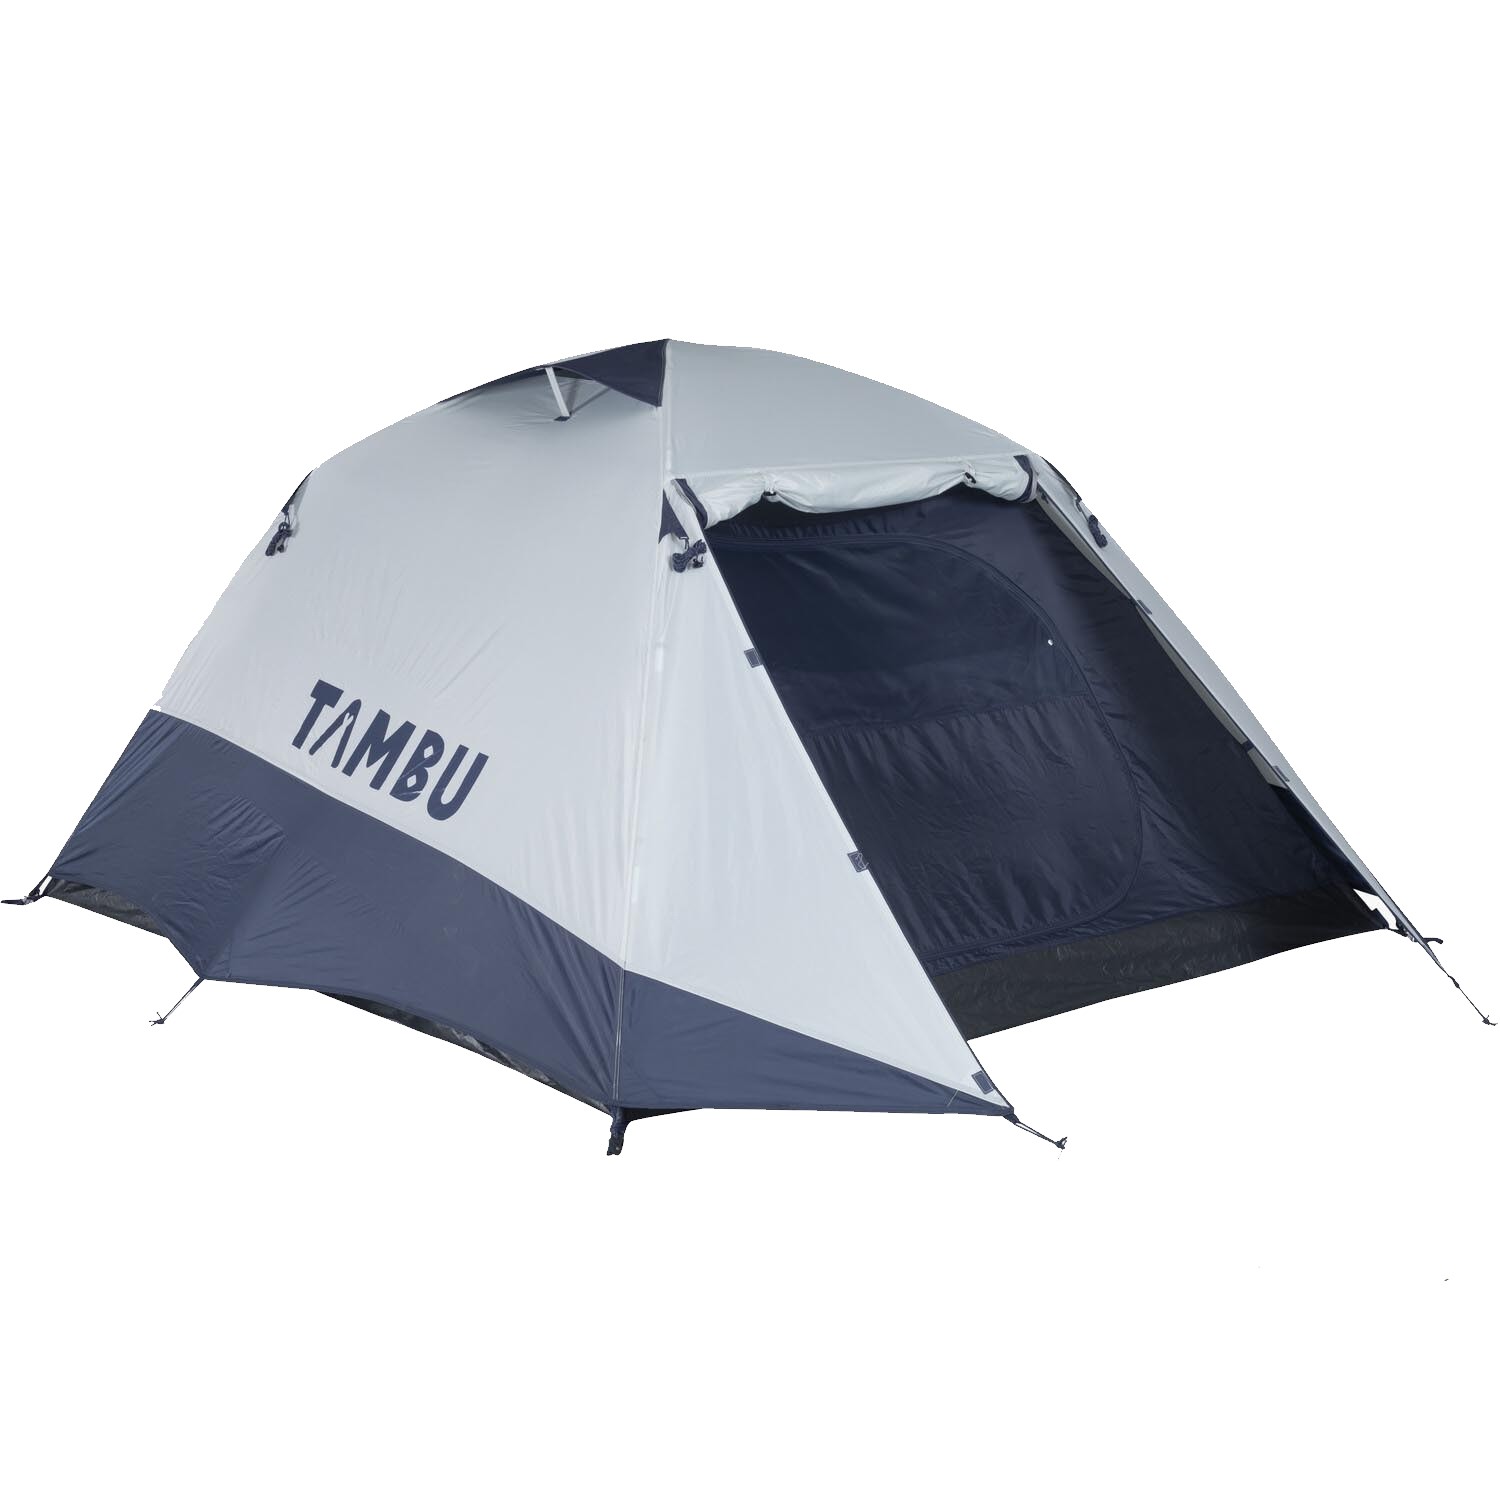 Tambu GAMBUJA Dome Tent - Four Image 1